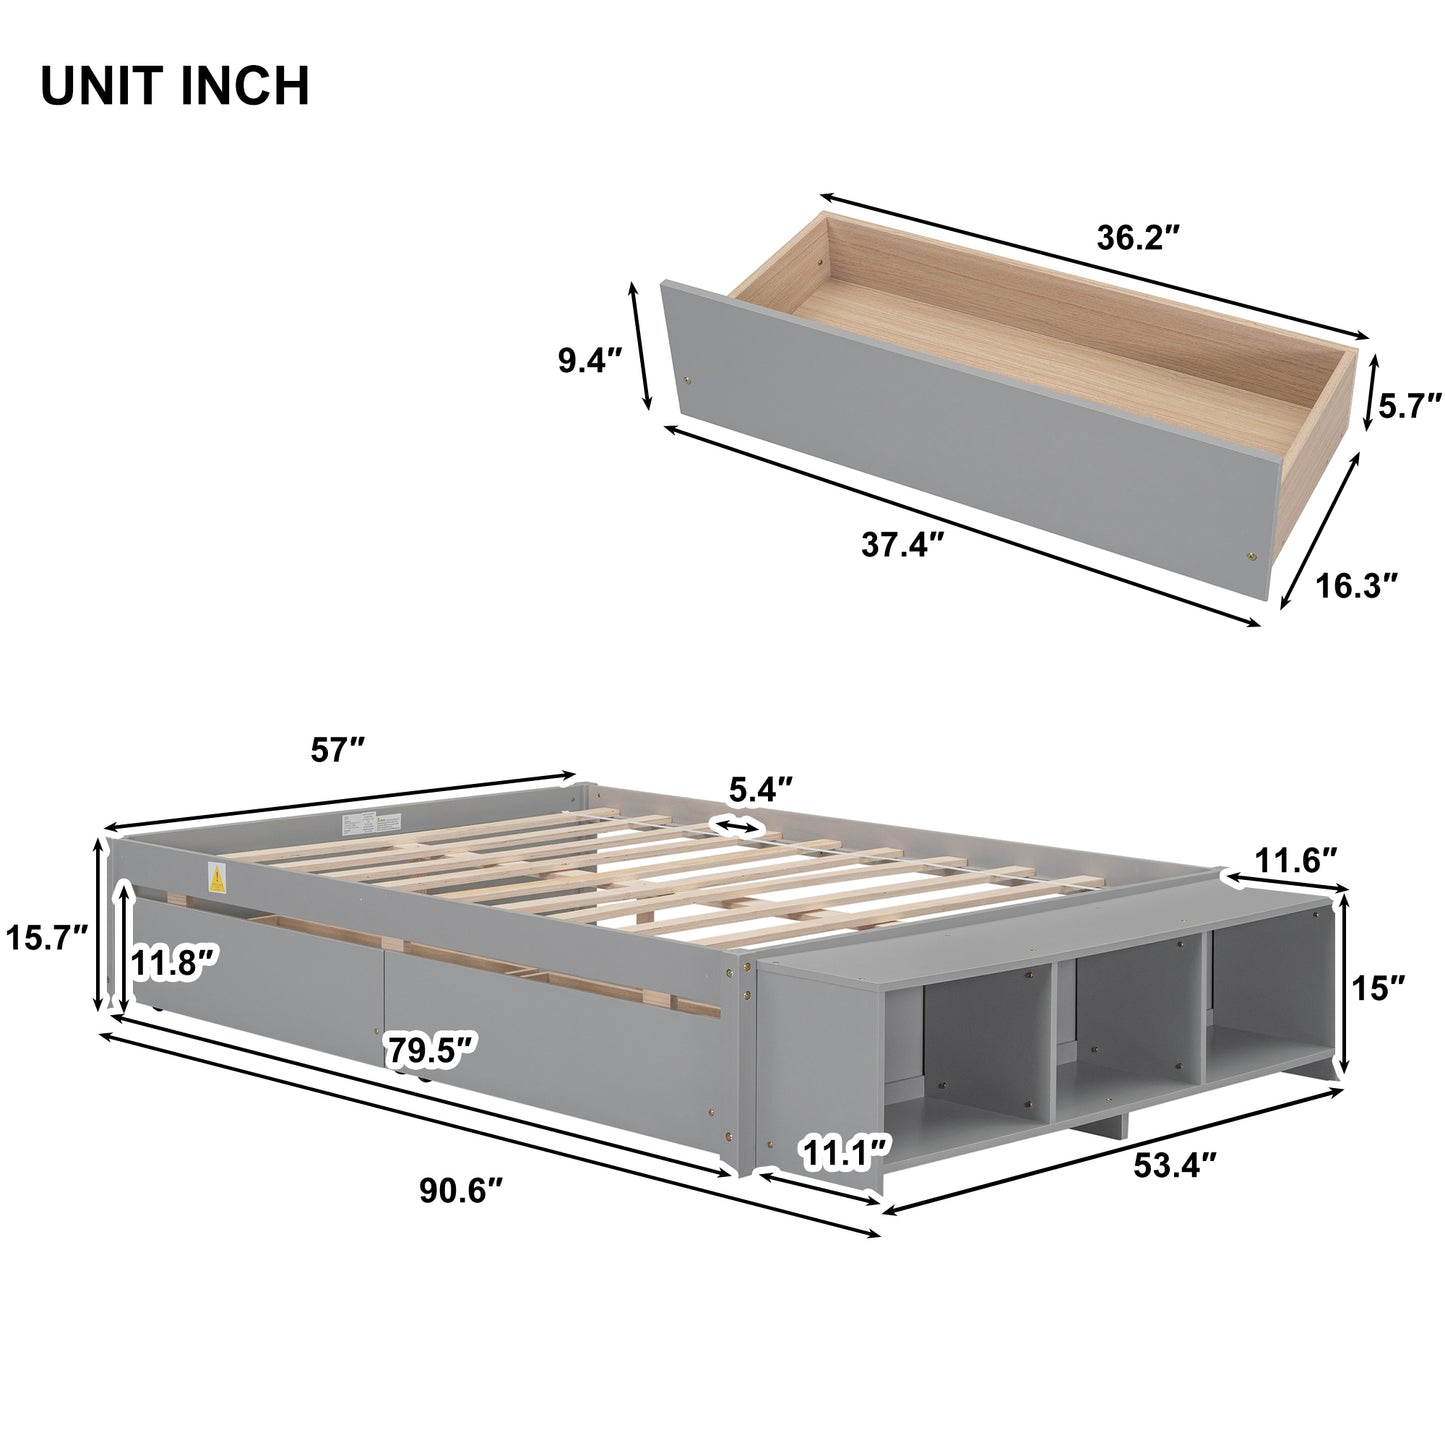 Full Size Platform Bed with Storage Case, 2 Storage drawers, Lengthwise Support Slat,Grey